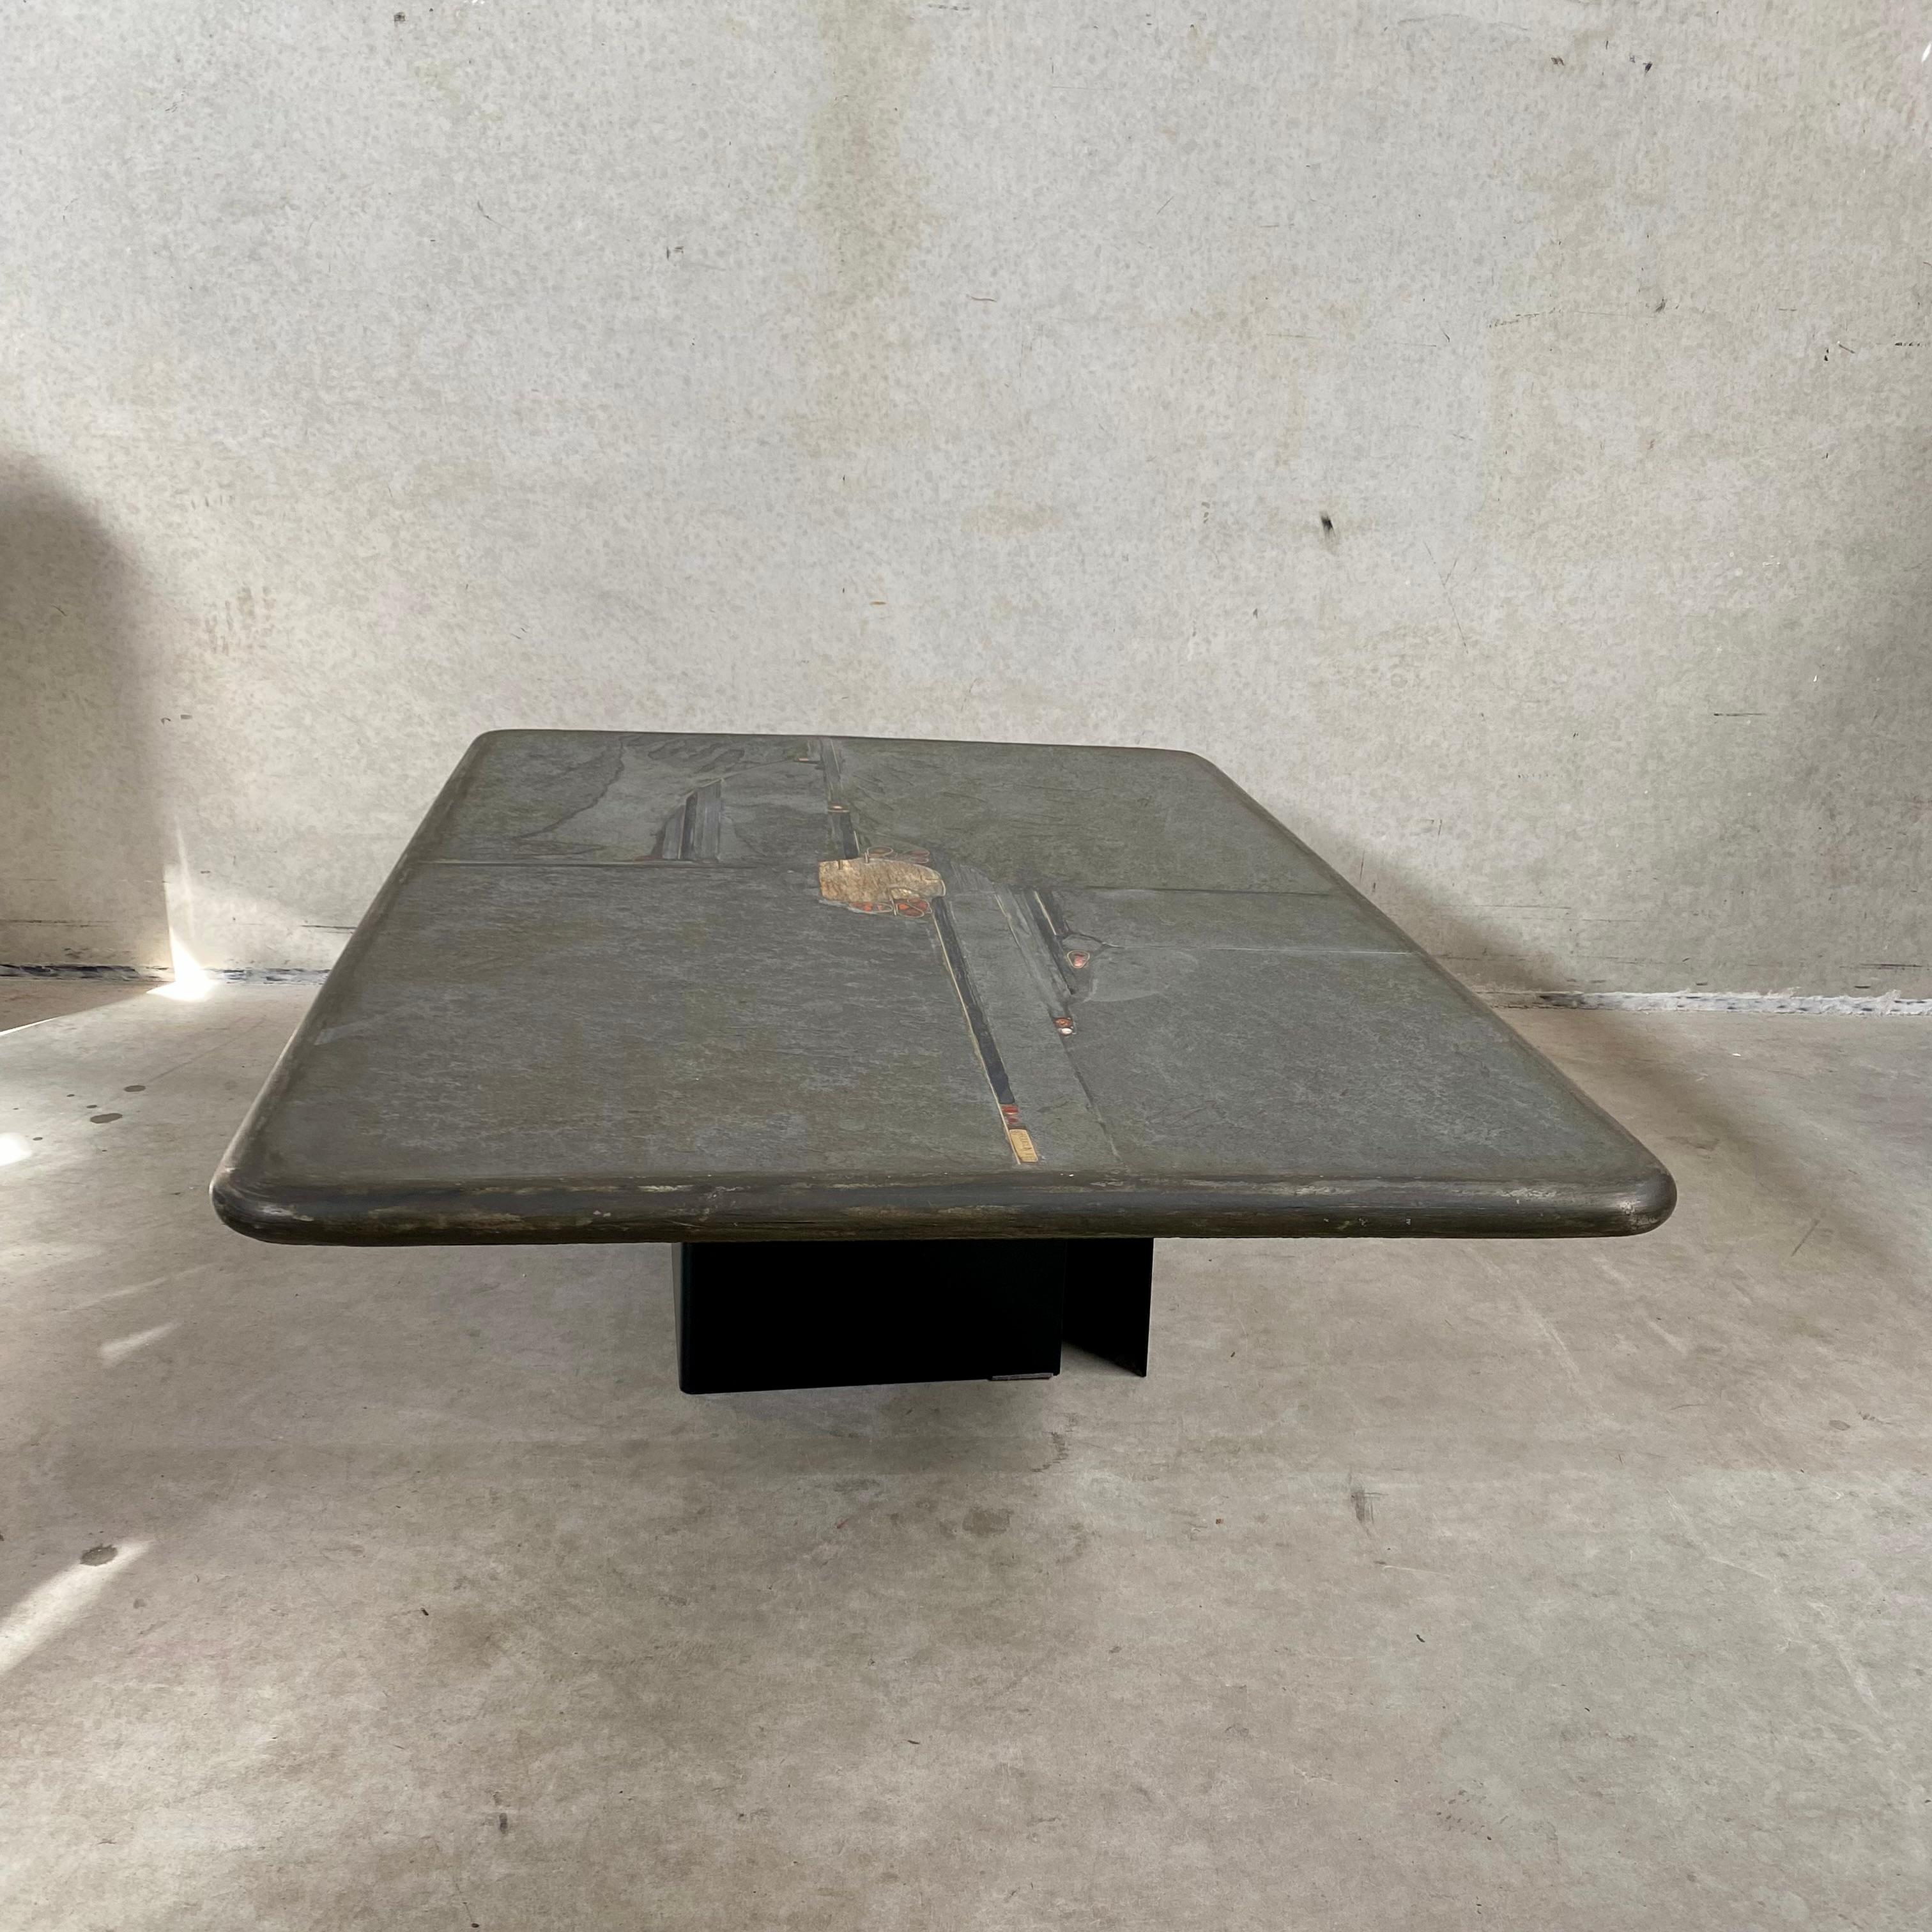 Brutalist Rectangular Slate Stone Coffee Table by Sculpter Paul Kingma 1996 For Sale 6